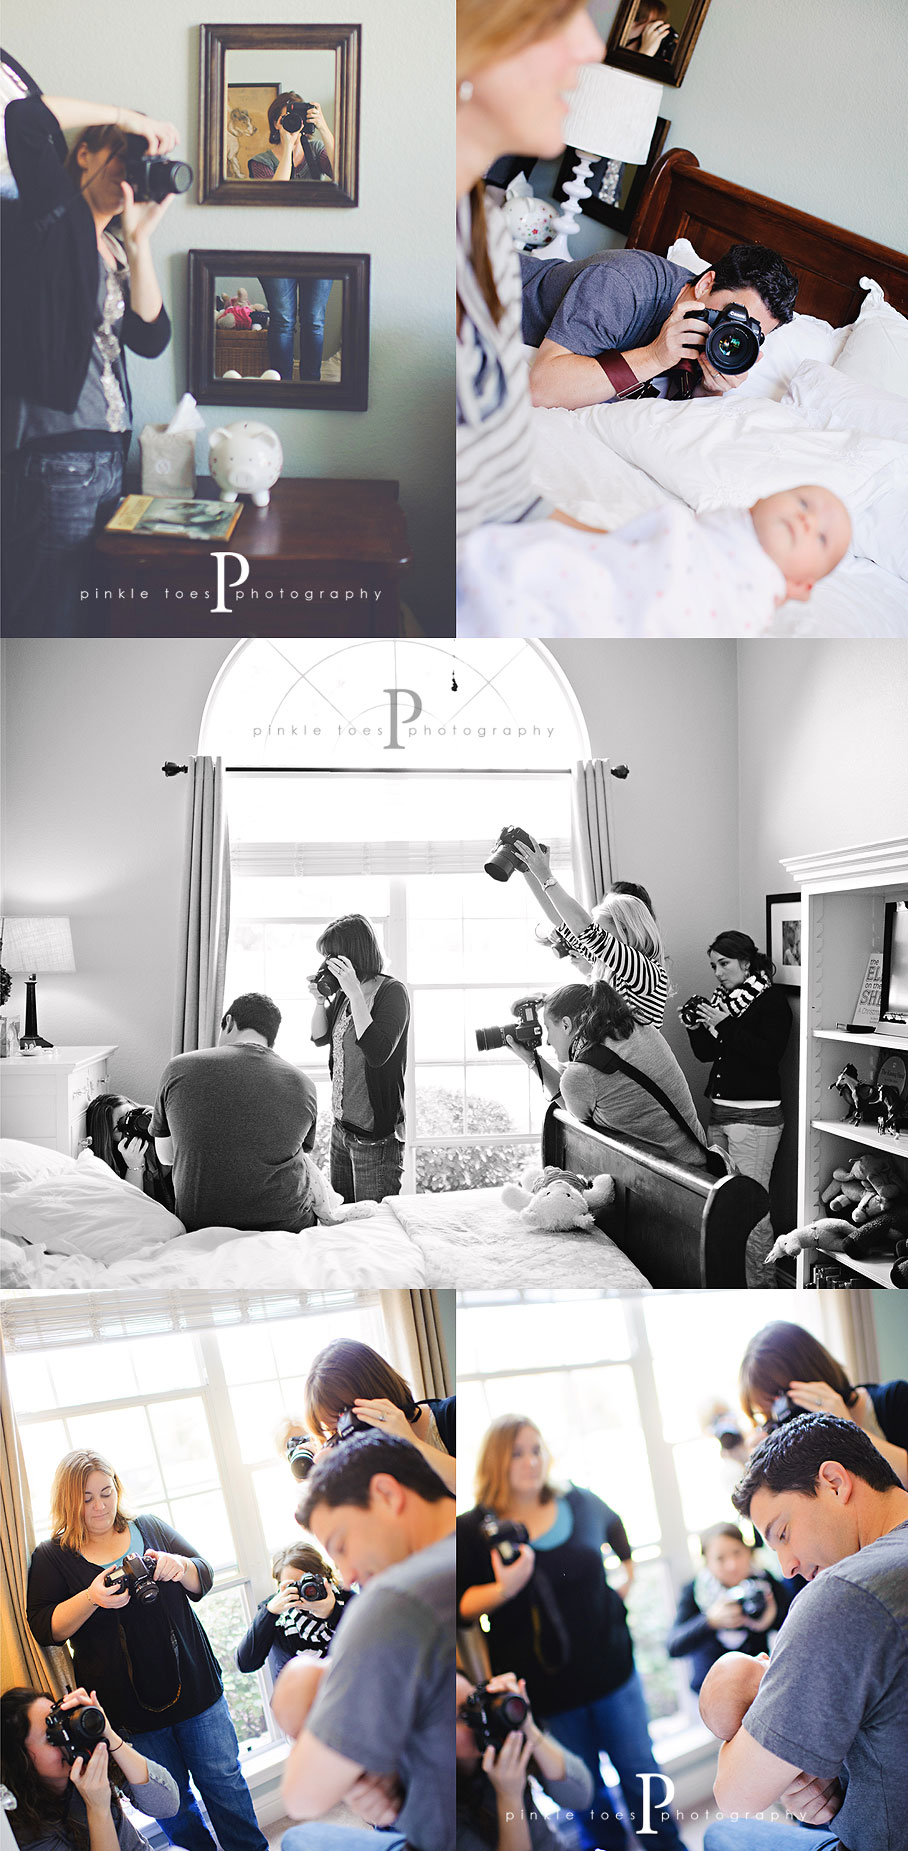 sbts-austin-professional-lifestyle-family-photographer-workshop.jpg